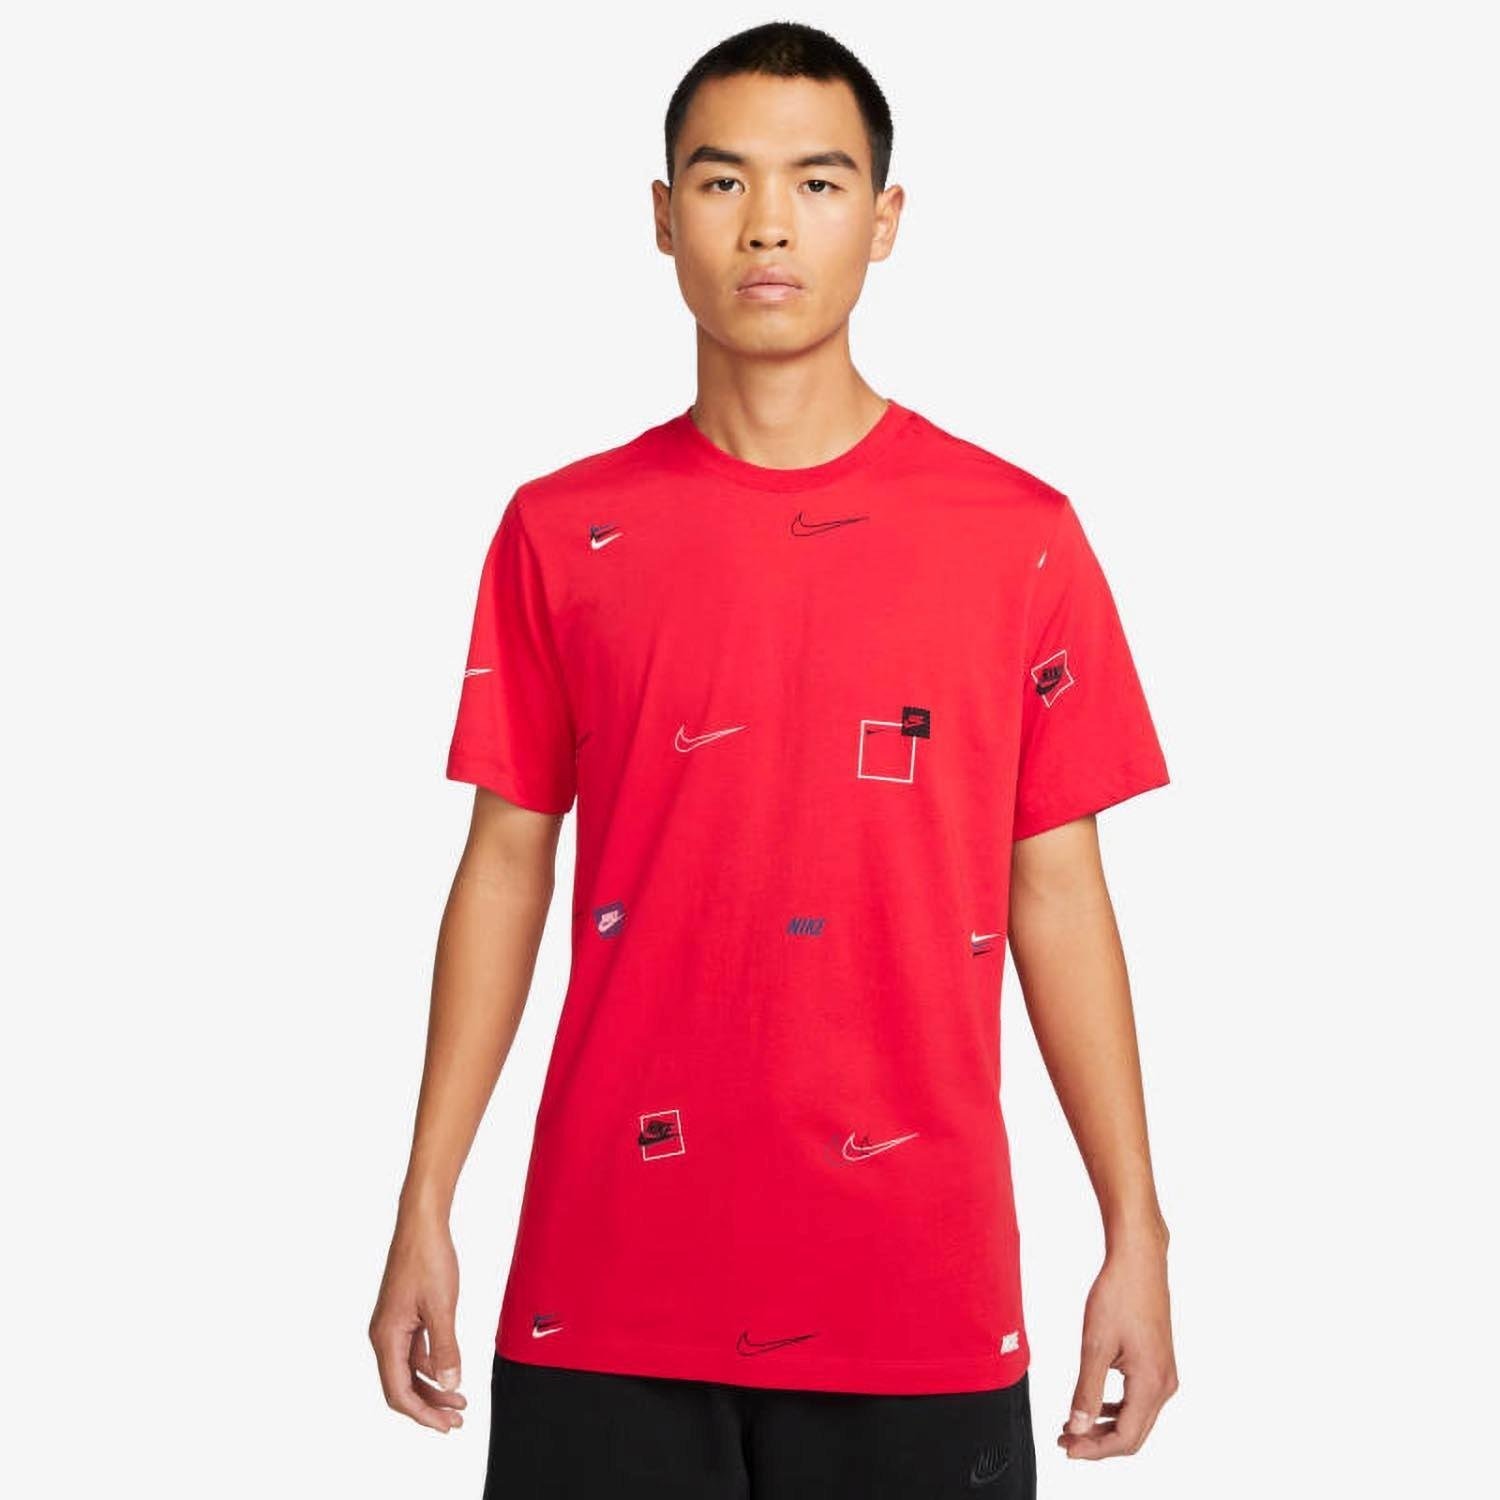 Nike Nike shirt rood heren heren